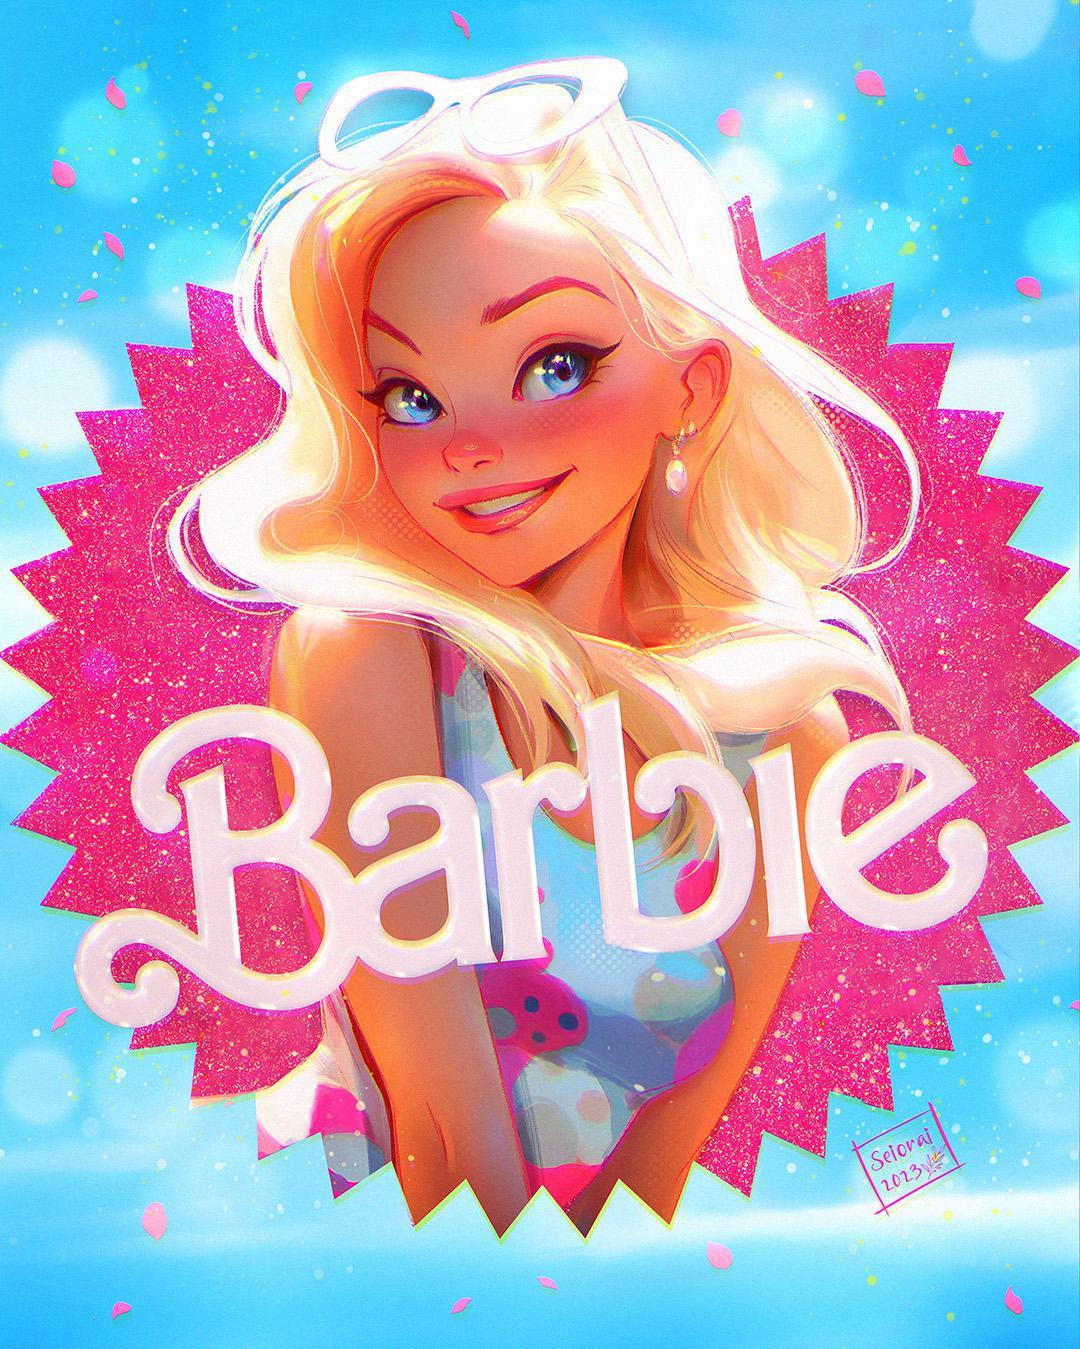 FANART] I drew a cartoon version of the Barbie selfie while